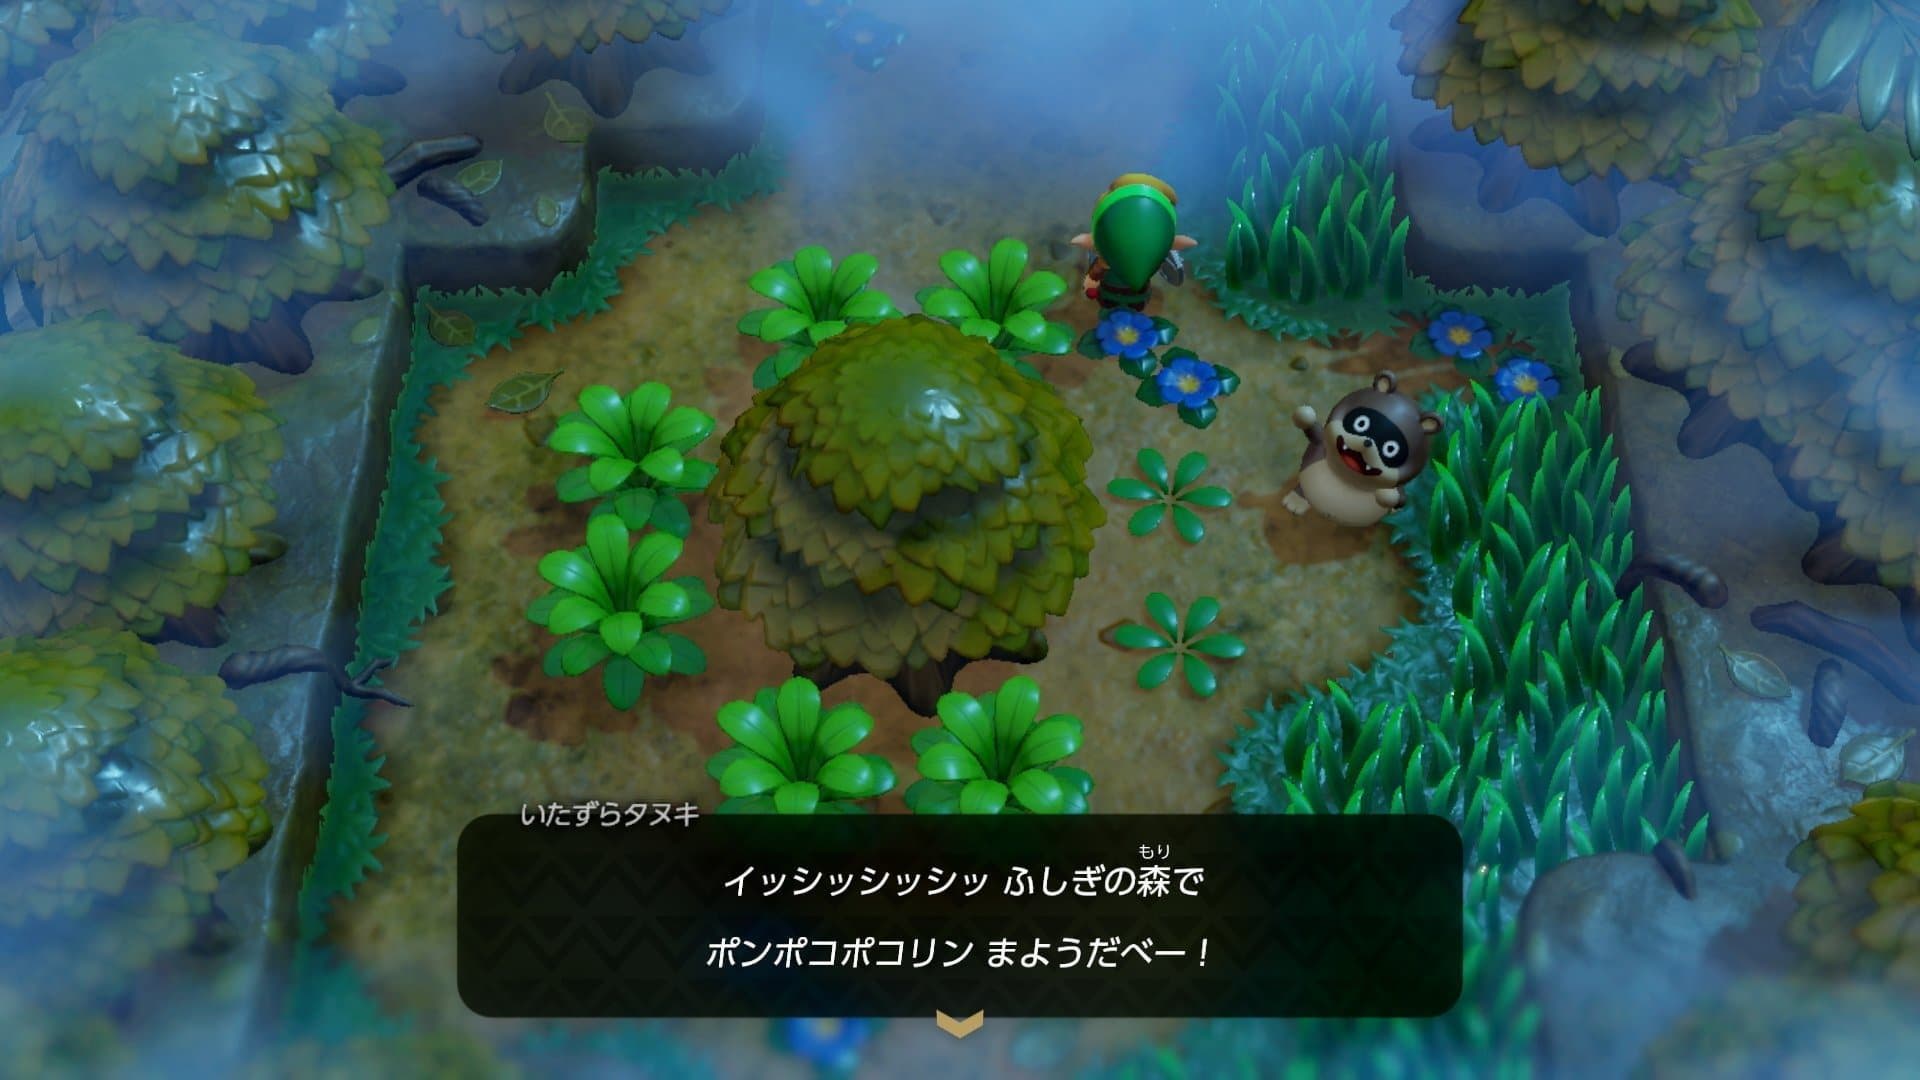 La cuenta oficial japonesa de Twitter de la saga Zelda comparte detalles de los Bosques Misteriosos de The Legend of Zelda: Link’s Awakening